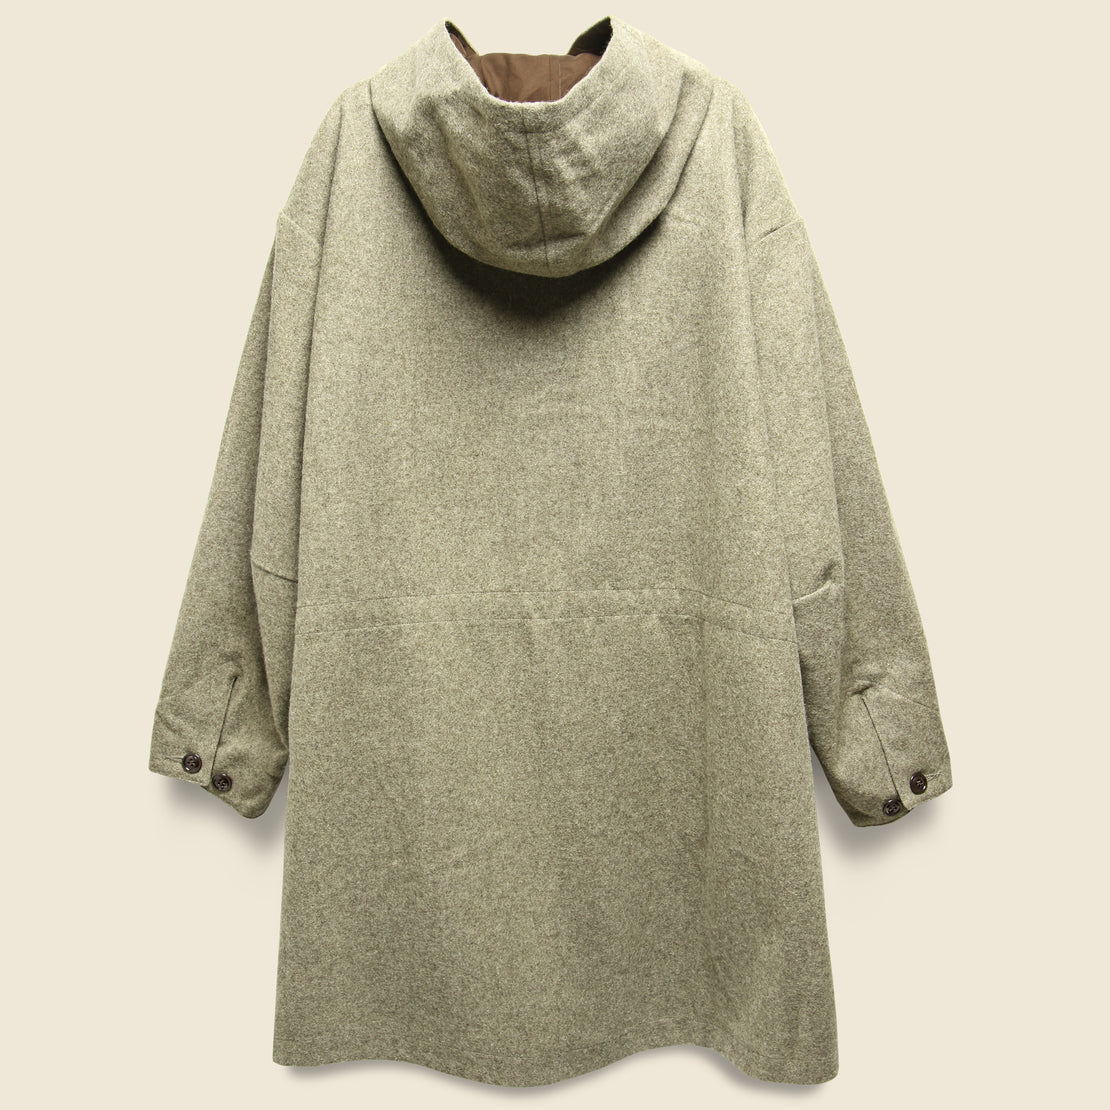 Wool Flannel Czech Coat - Dark Beige - Monitaly - STAG Provisions - W - Outerwear - Coat/Jacket